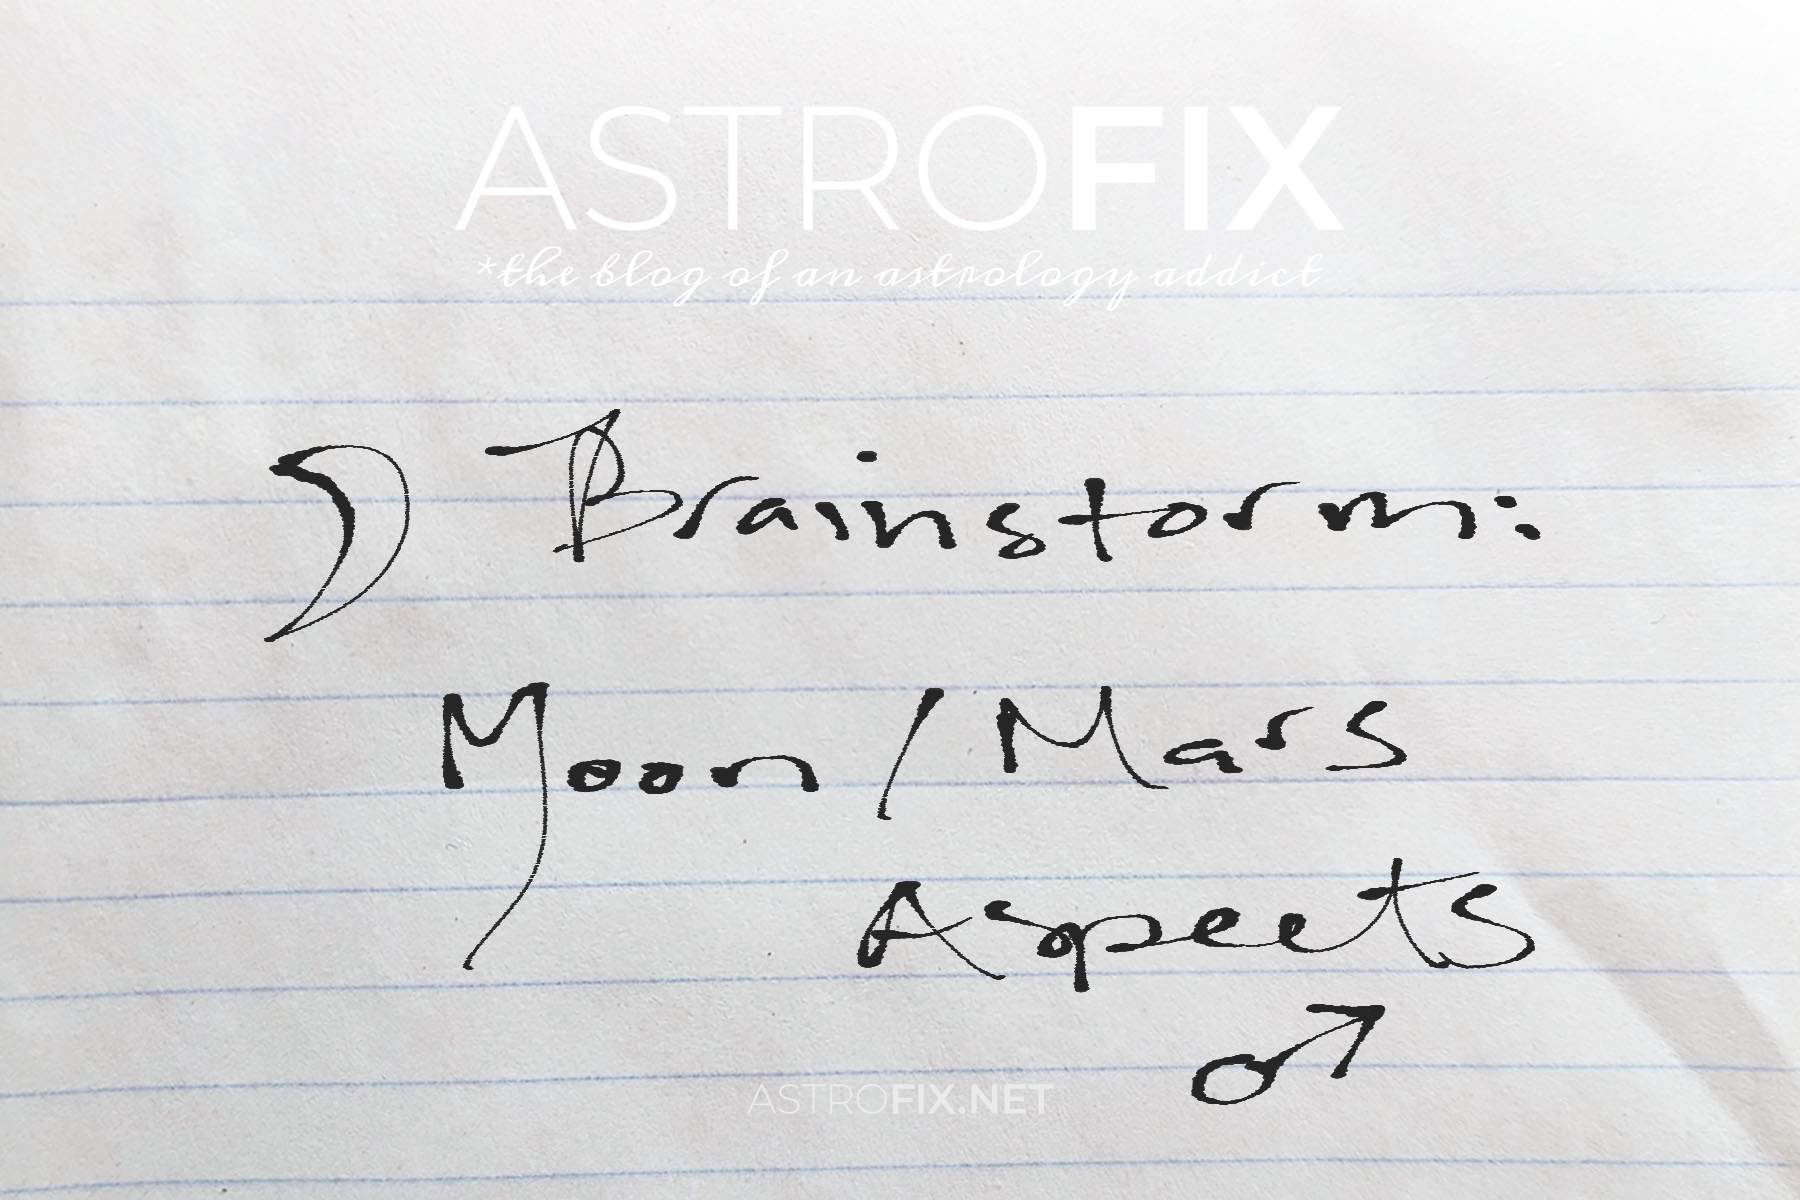 brainstorm-moon-mars-astrology-aspects